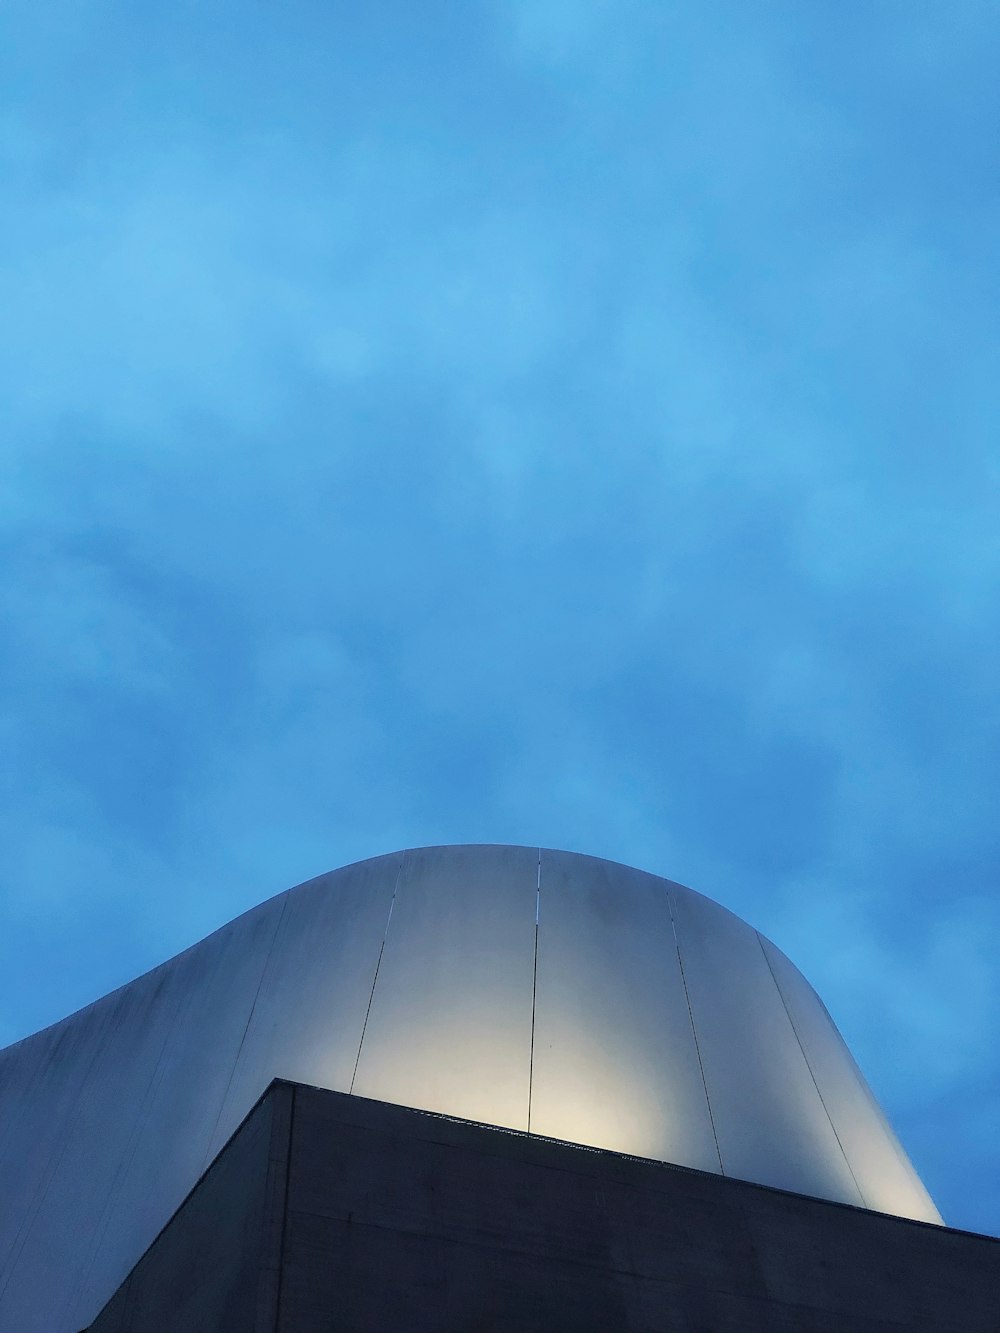 gray round building under blue sky